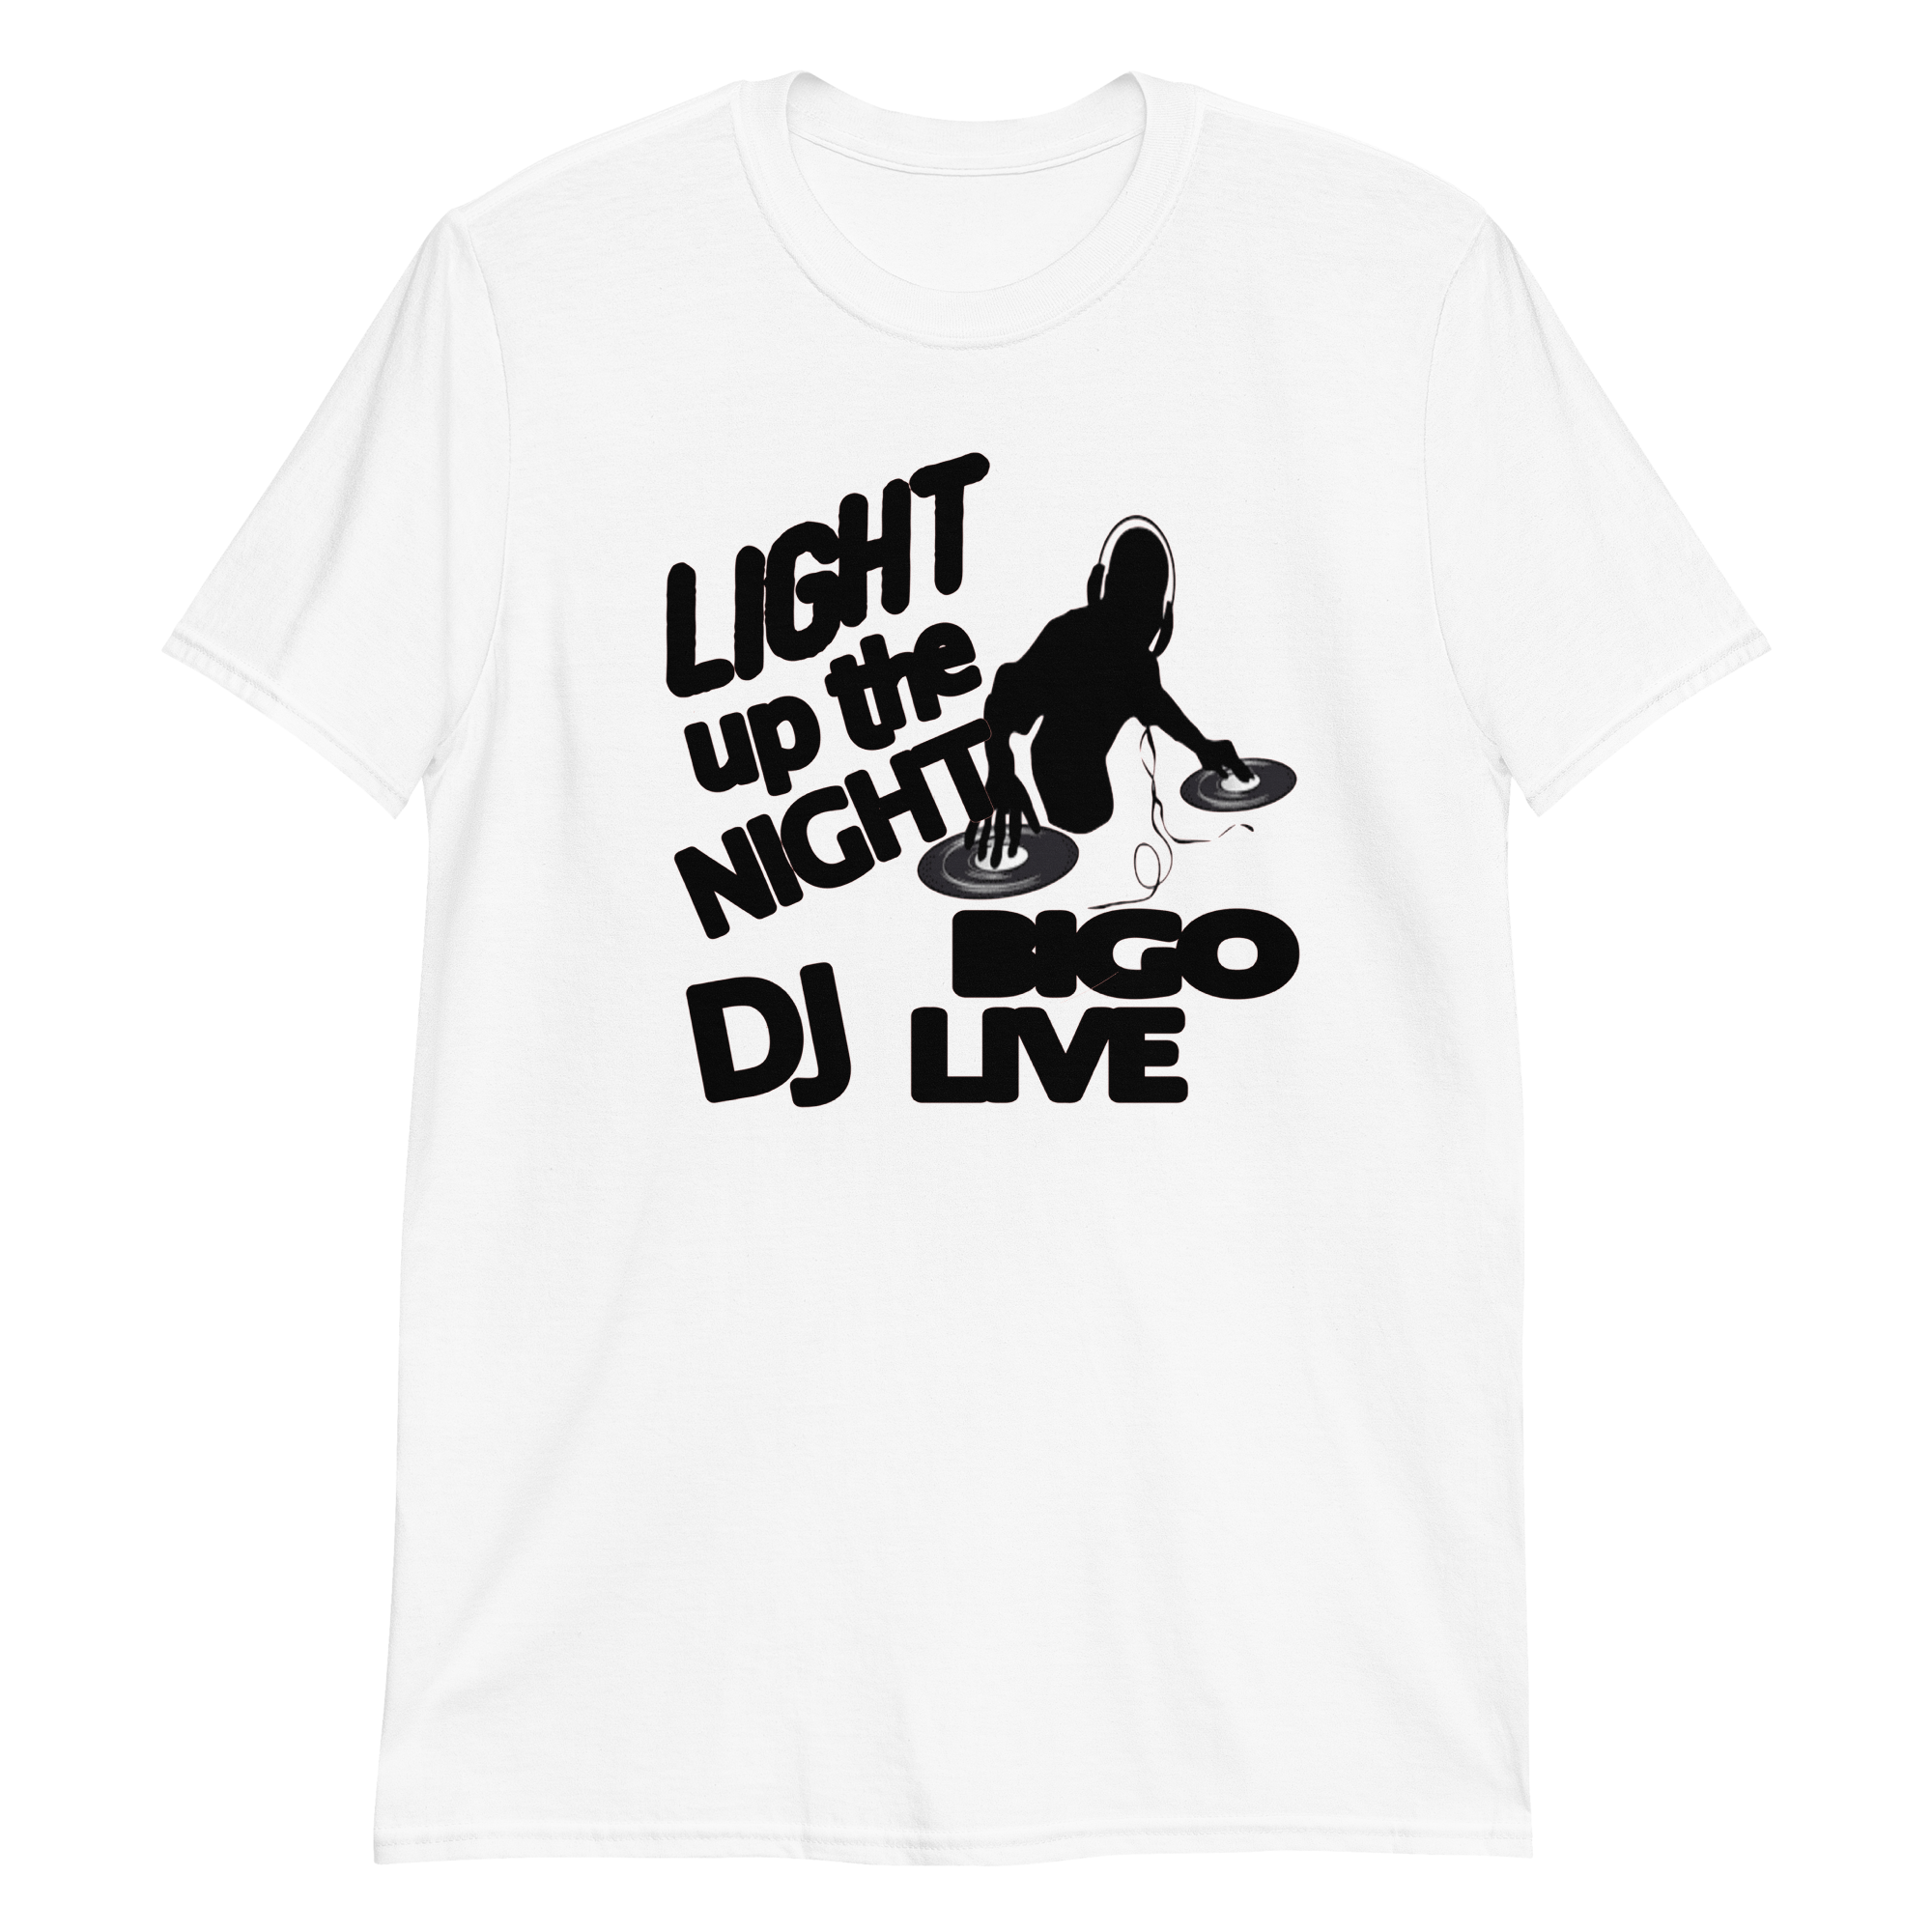 LIGHT UP THE NIGHT DJ BIGO LIVE